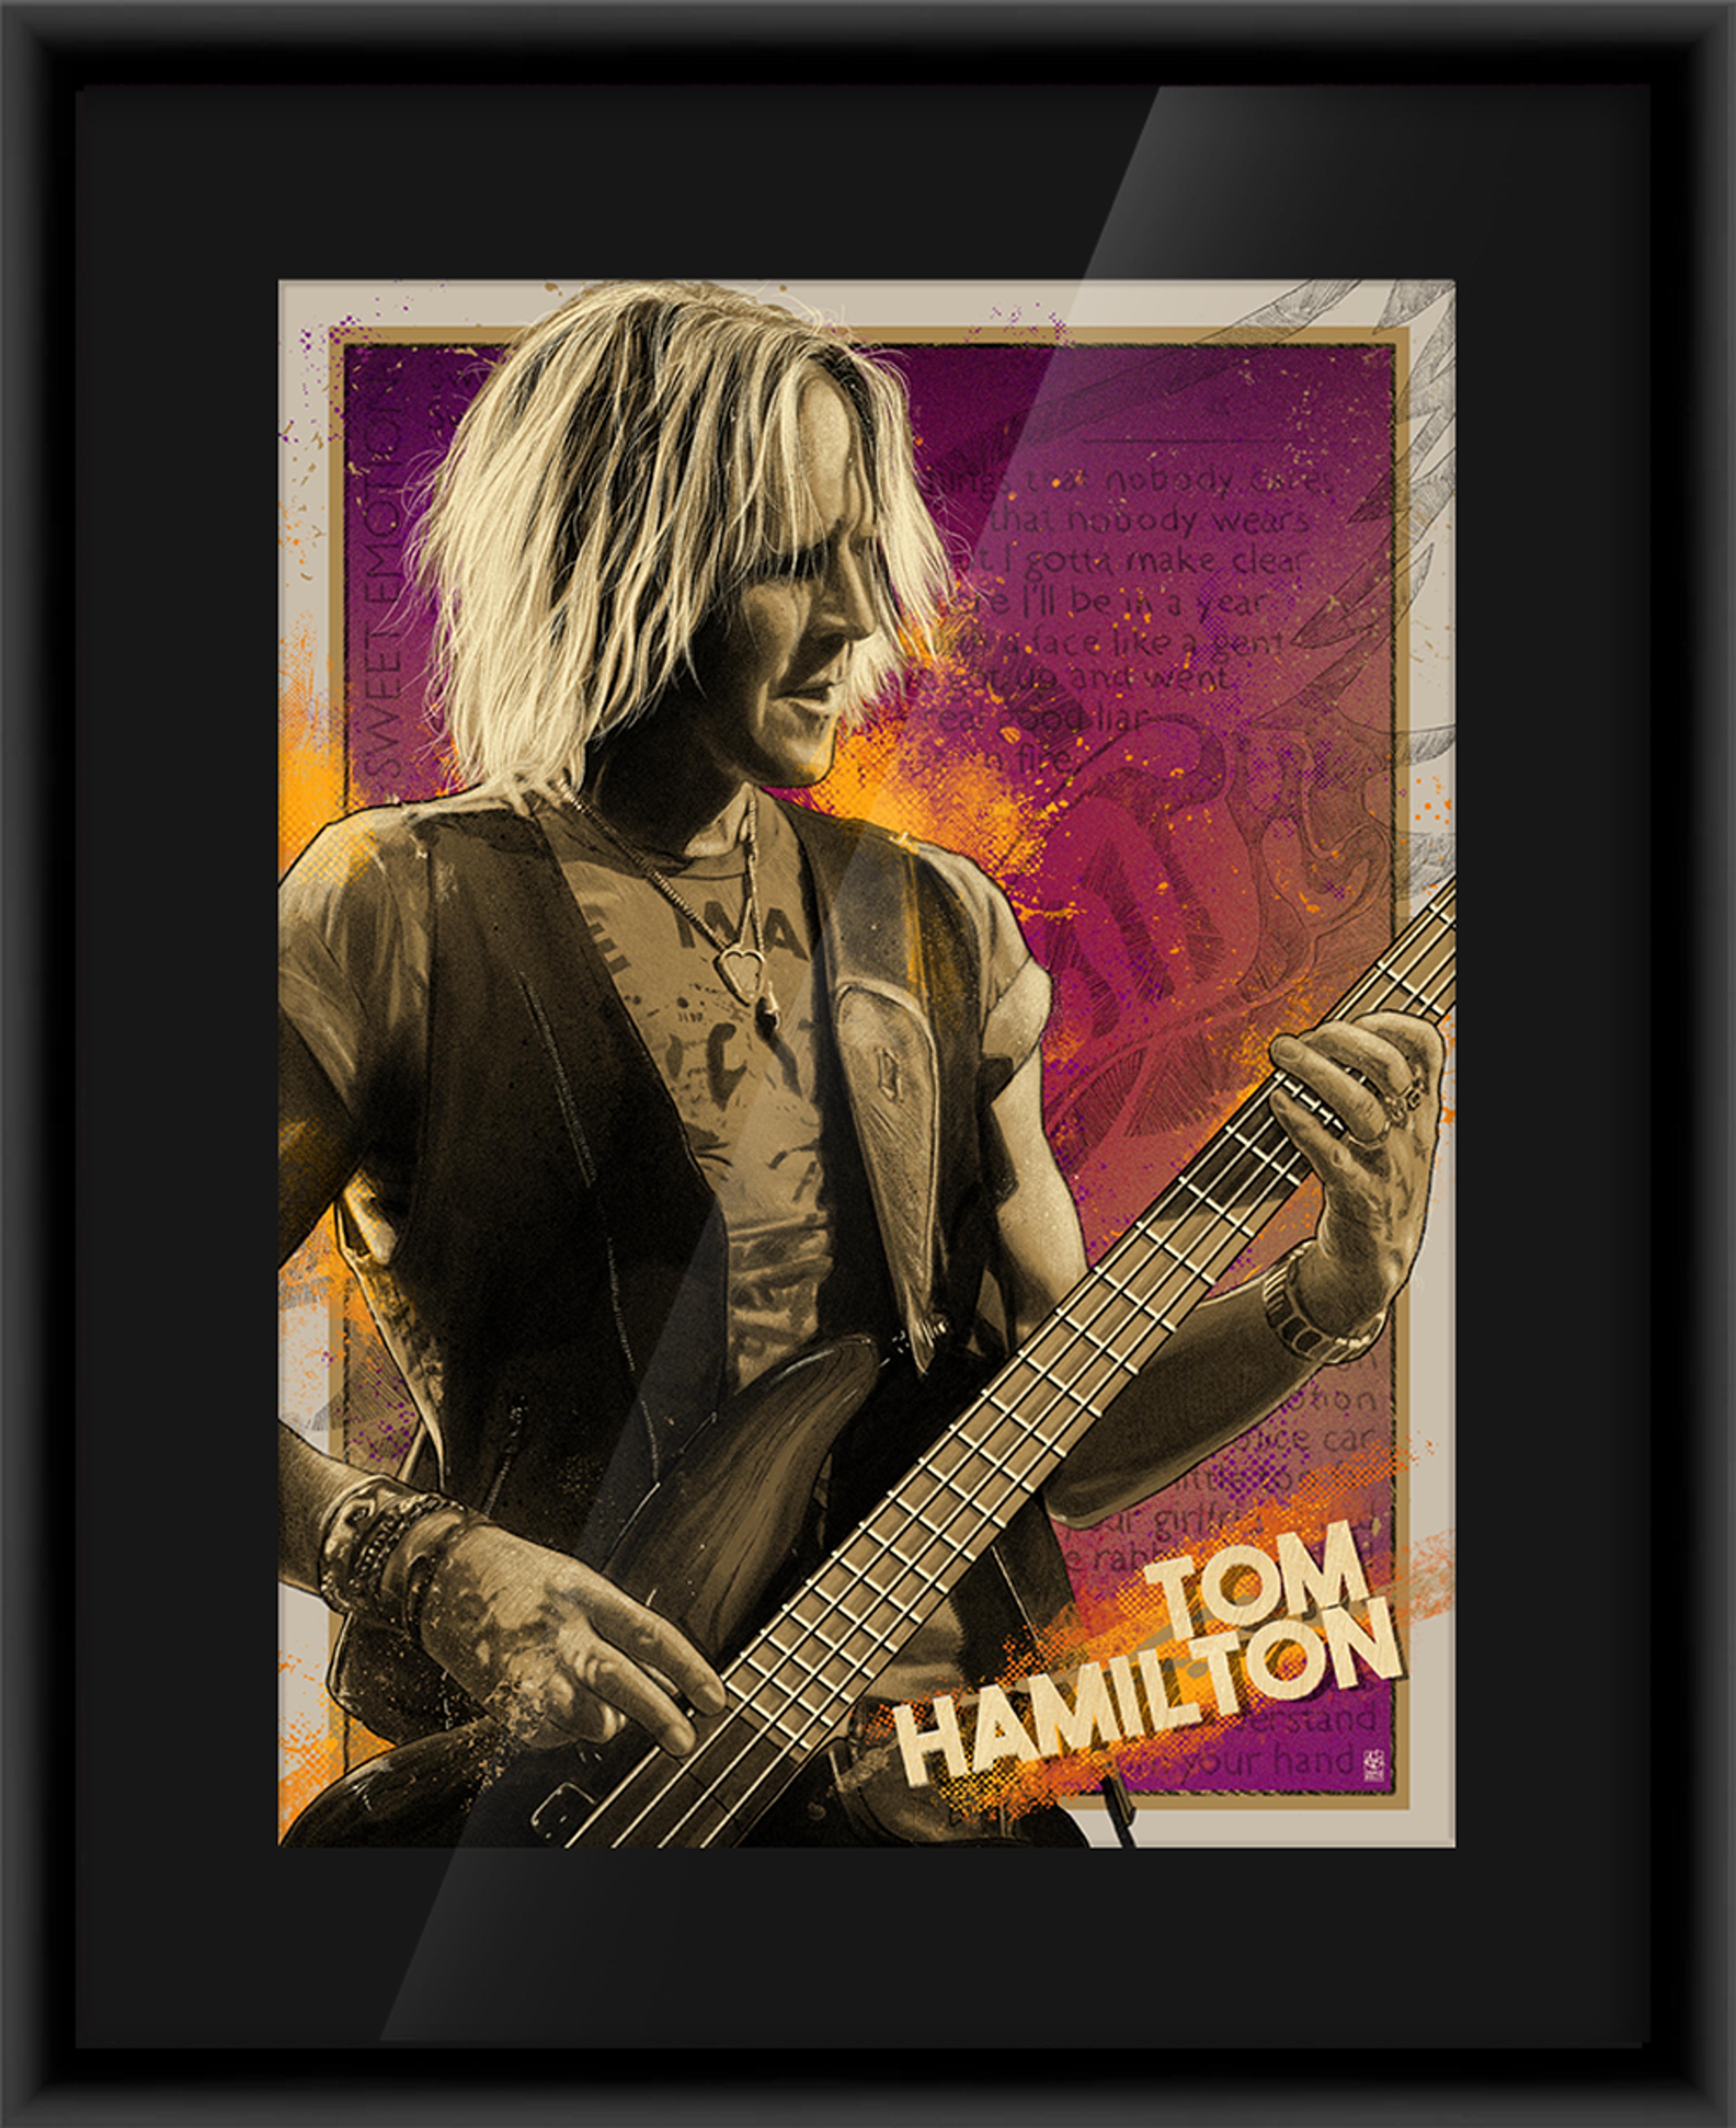 Alternate View 2 of Signature Series: Aerosmith's Tom Hamilton "Sweet Emotion"